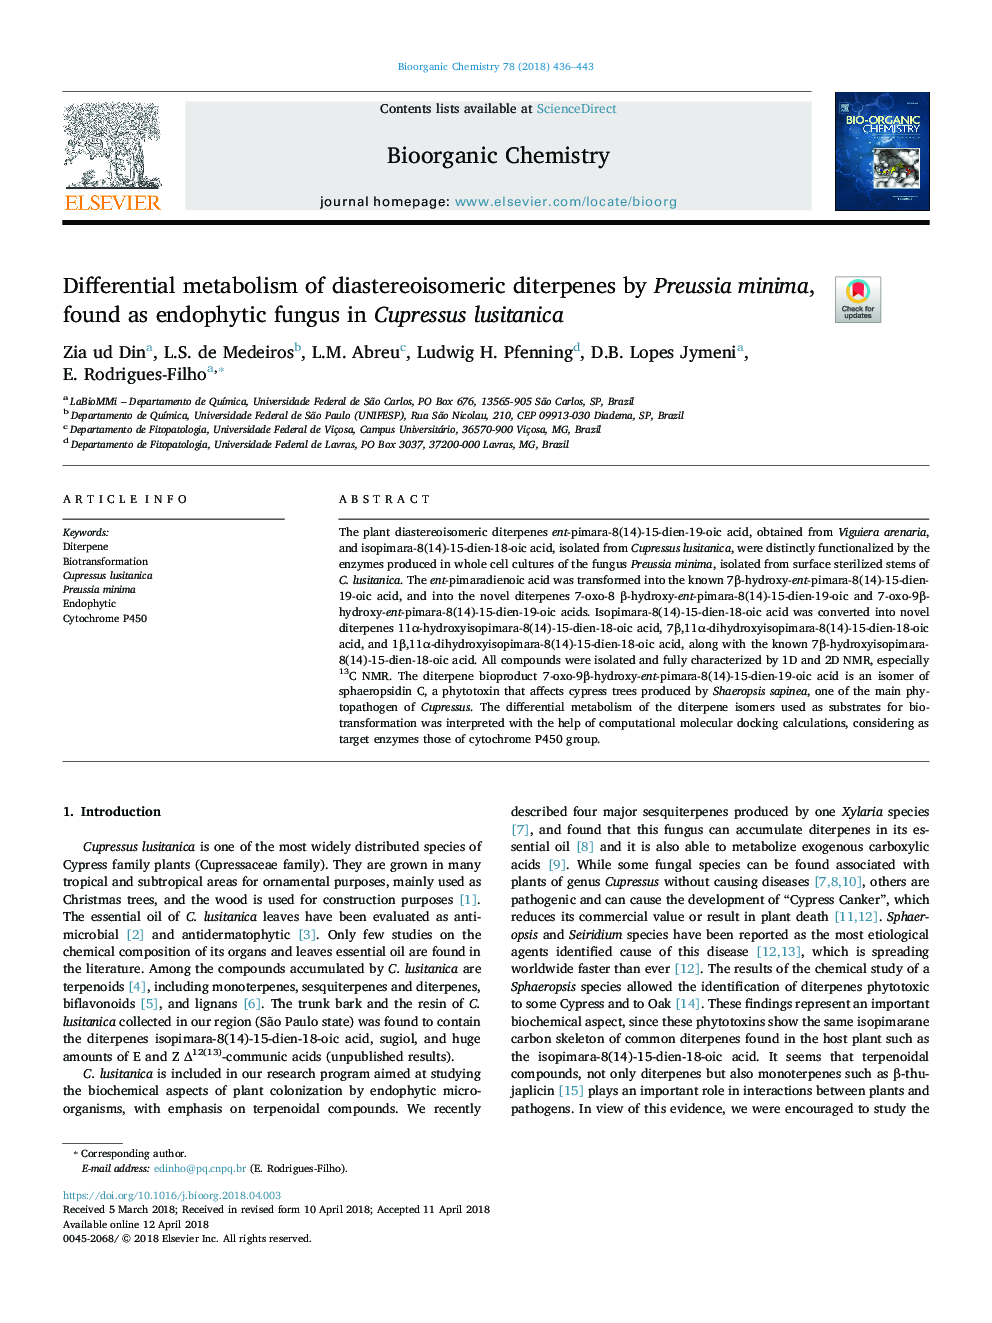 Differential metabolism of diastereoisomeric diterpenes by Preussia minima, found as endophytic fungus in Cupressus lusitanica